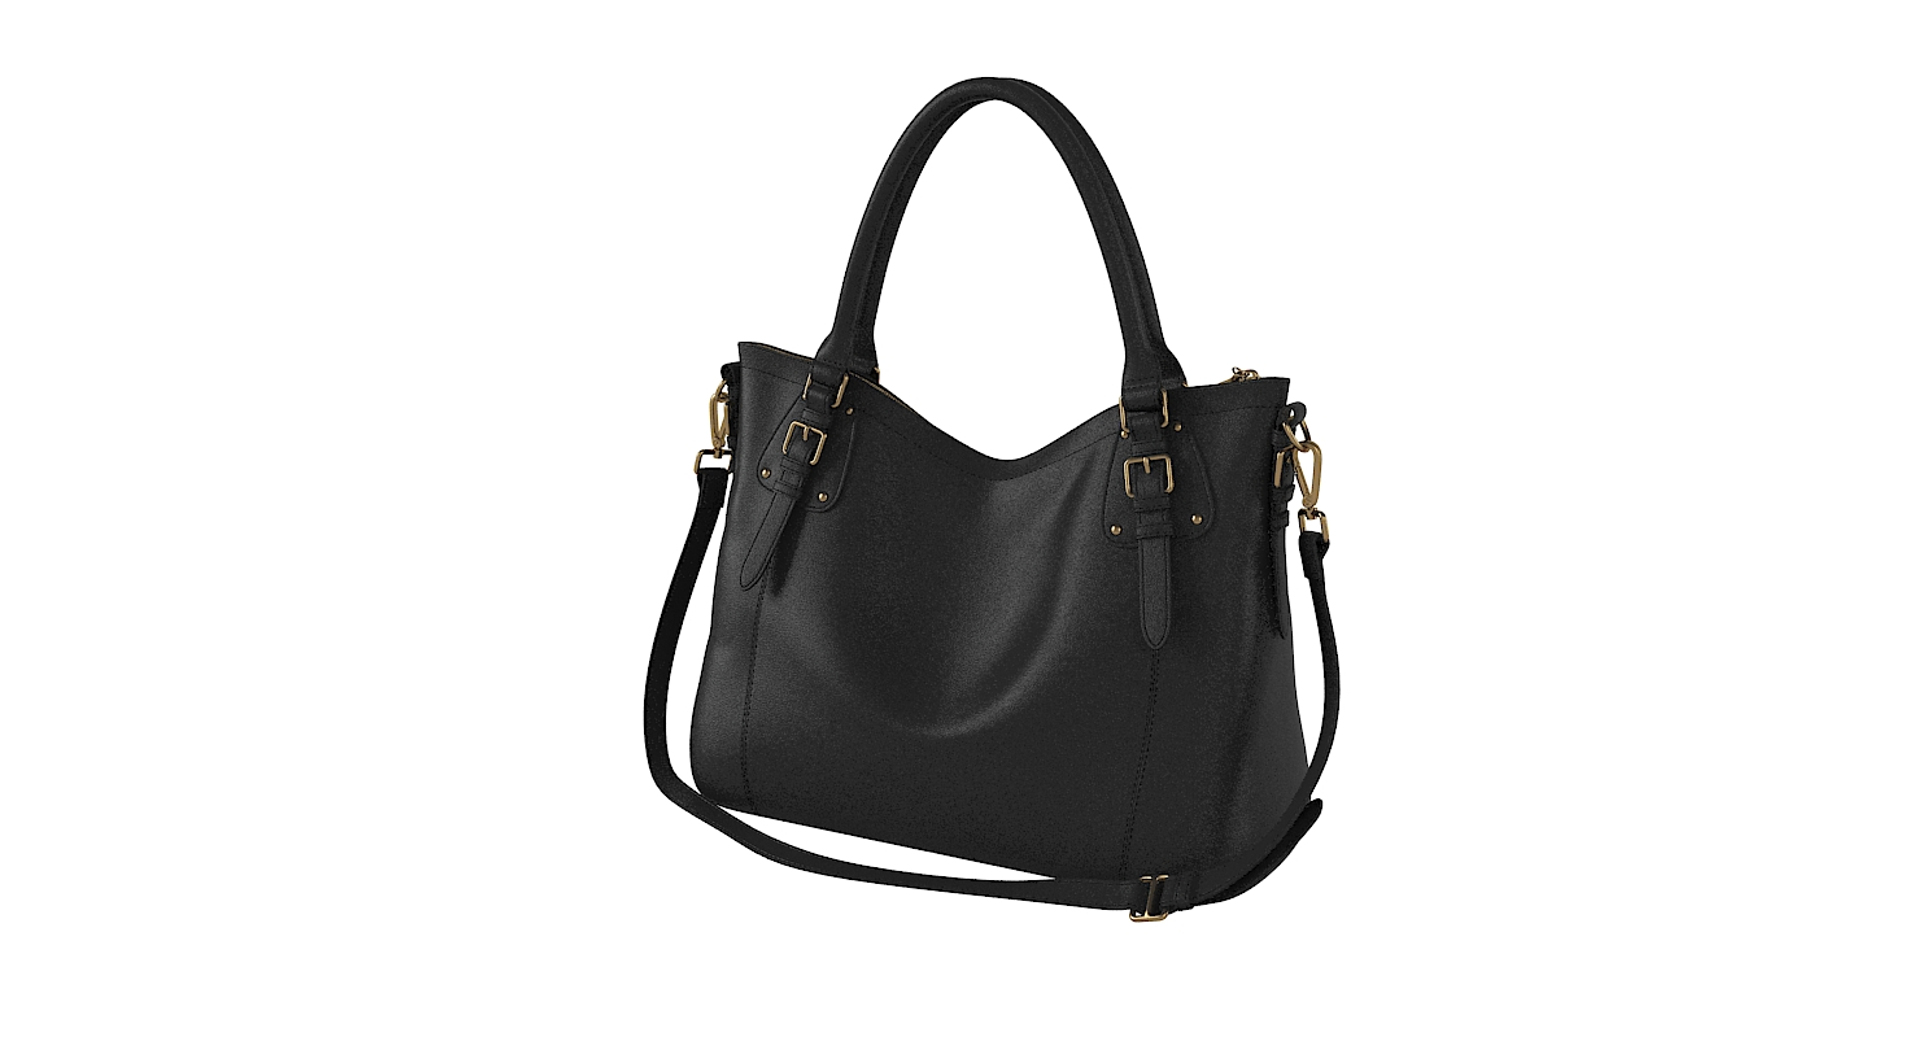  Kattee Women's Soft Genuine Leather Tote Bag, Top